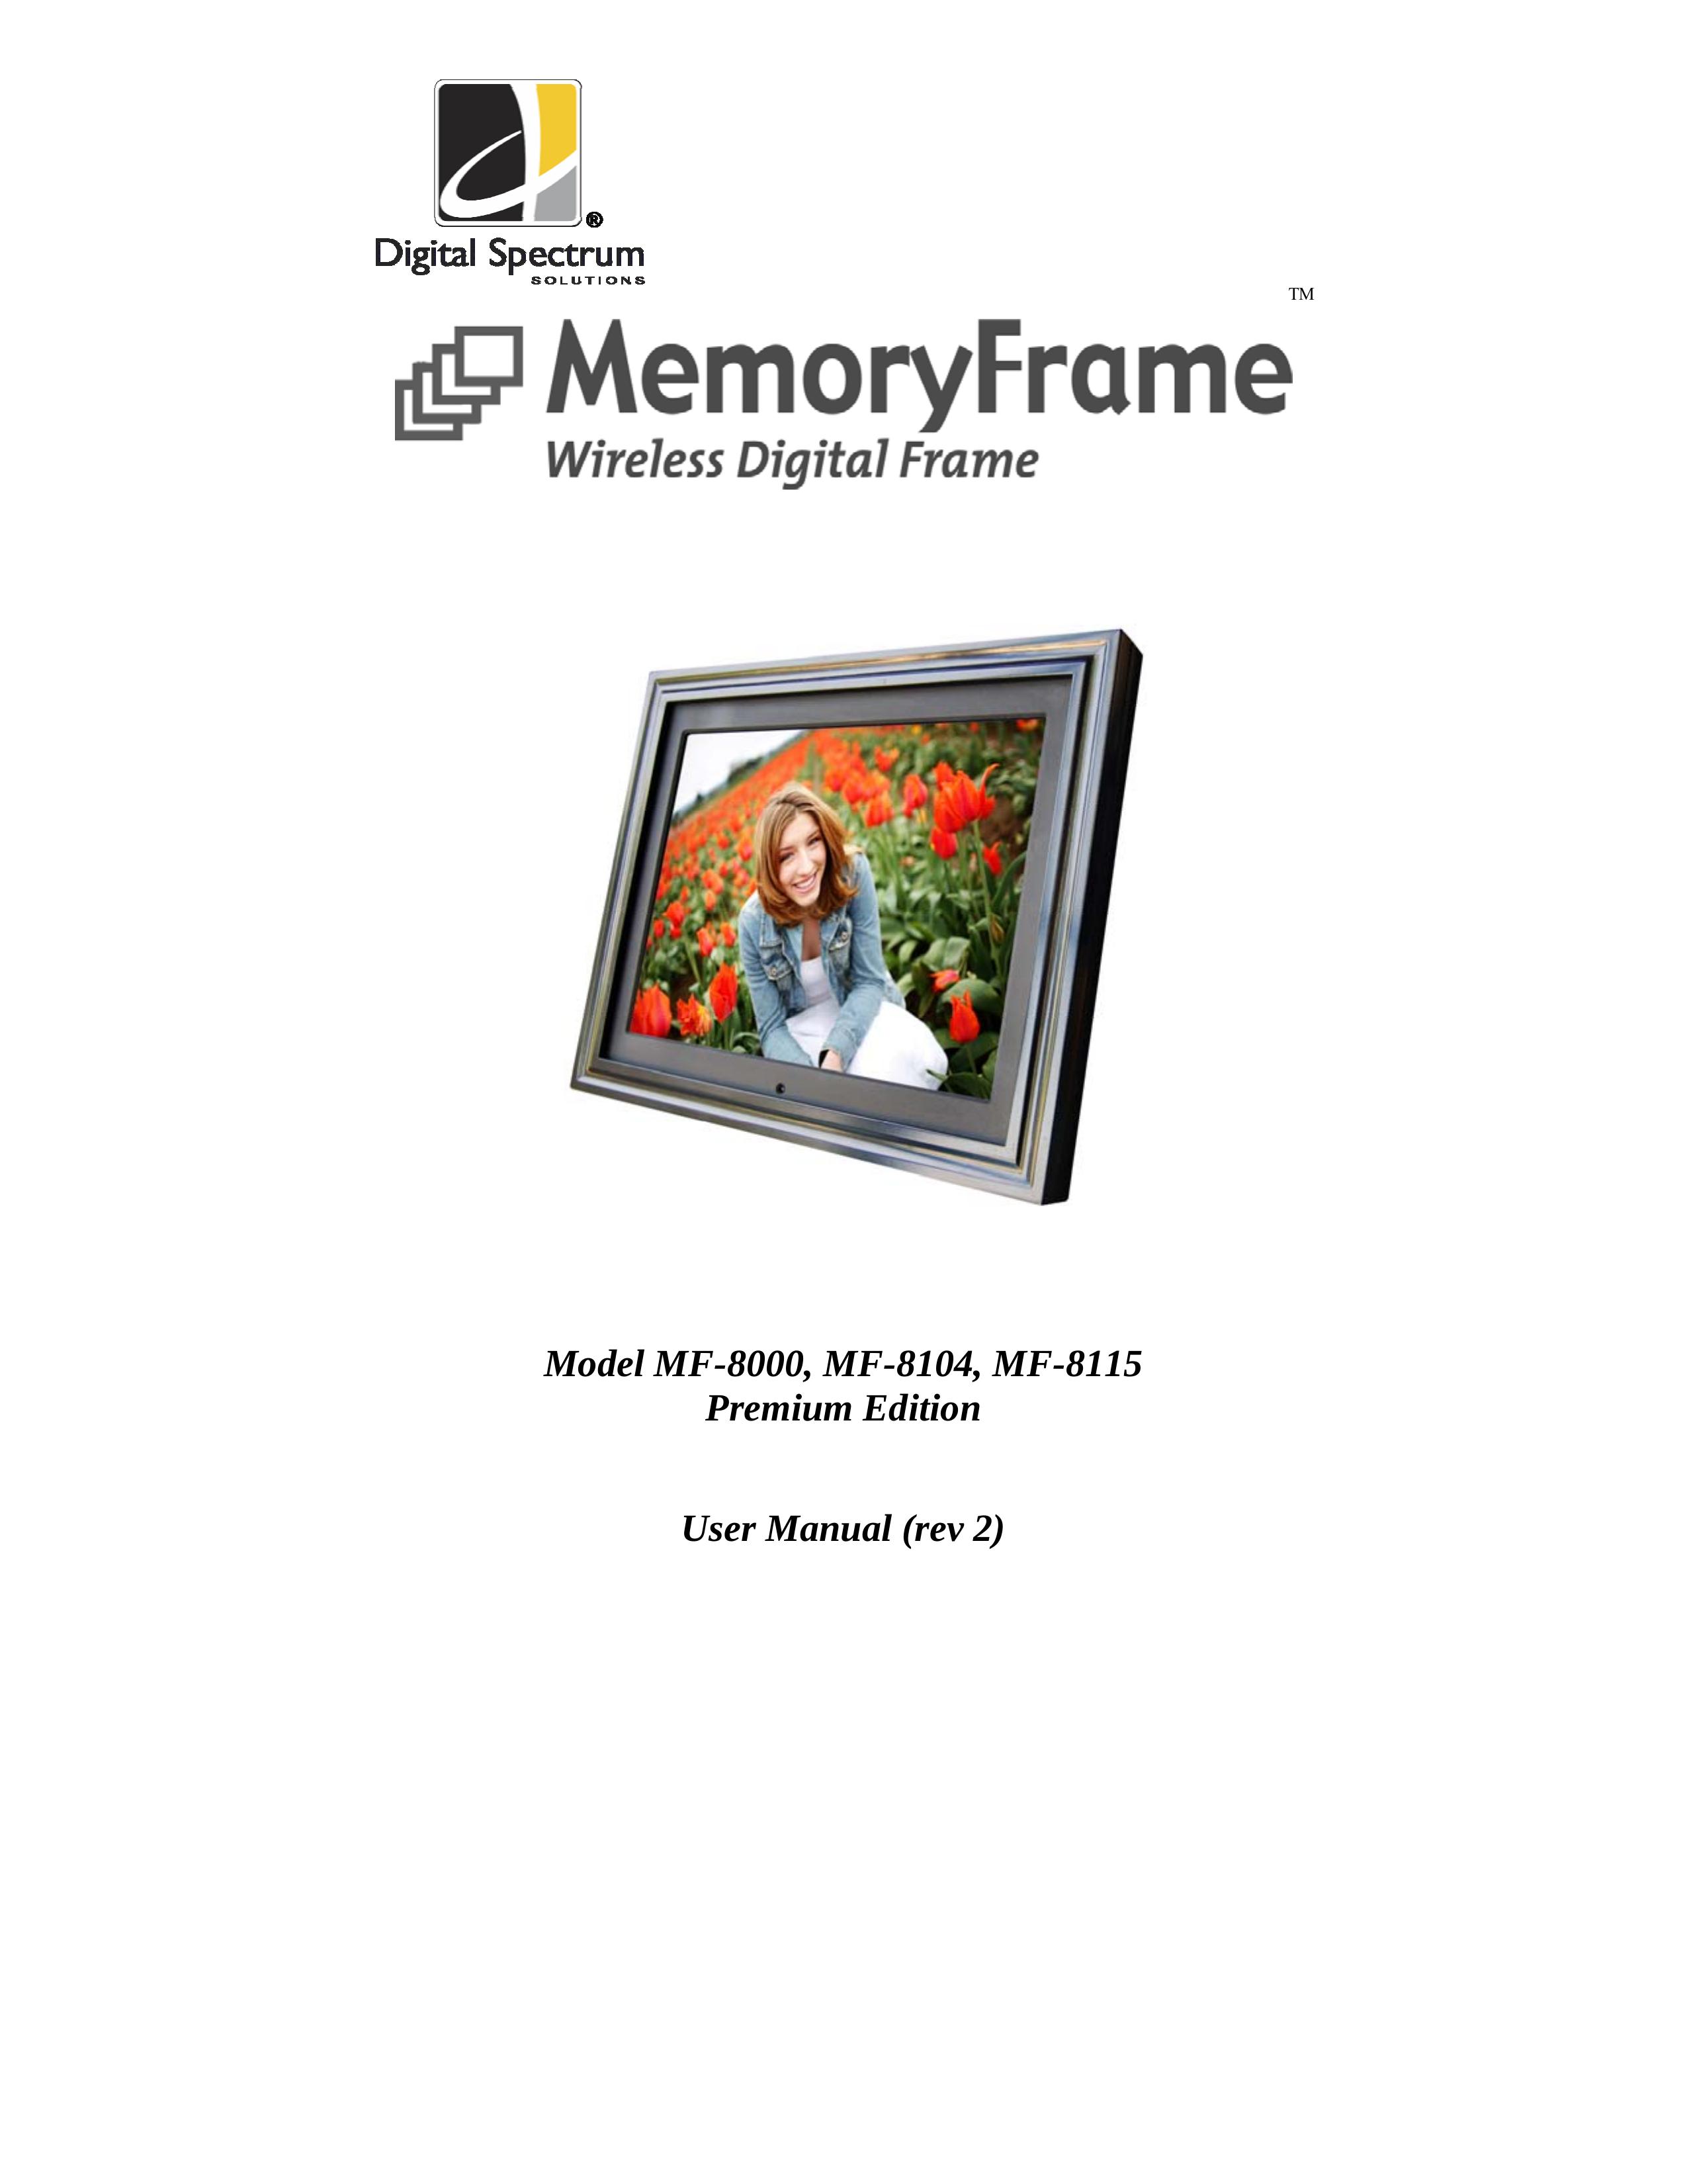 Digital Spectrum MF-8115 Digital Photo Frame User Manual